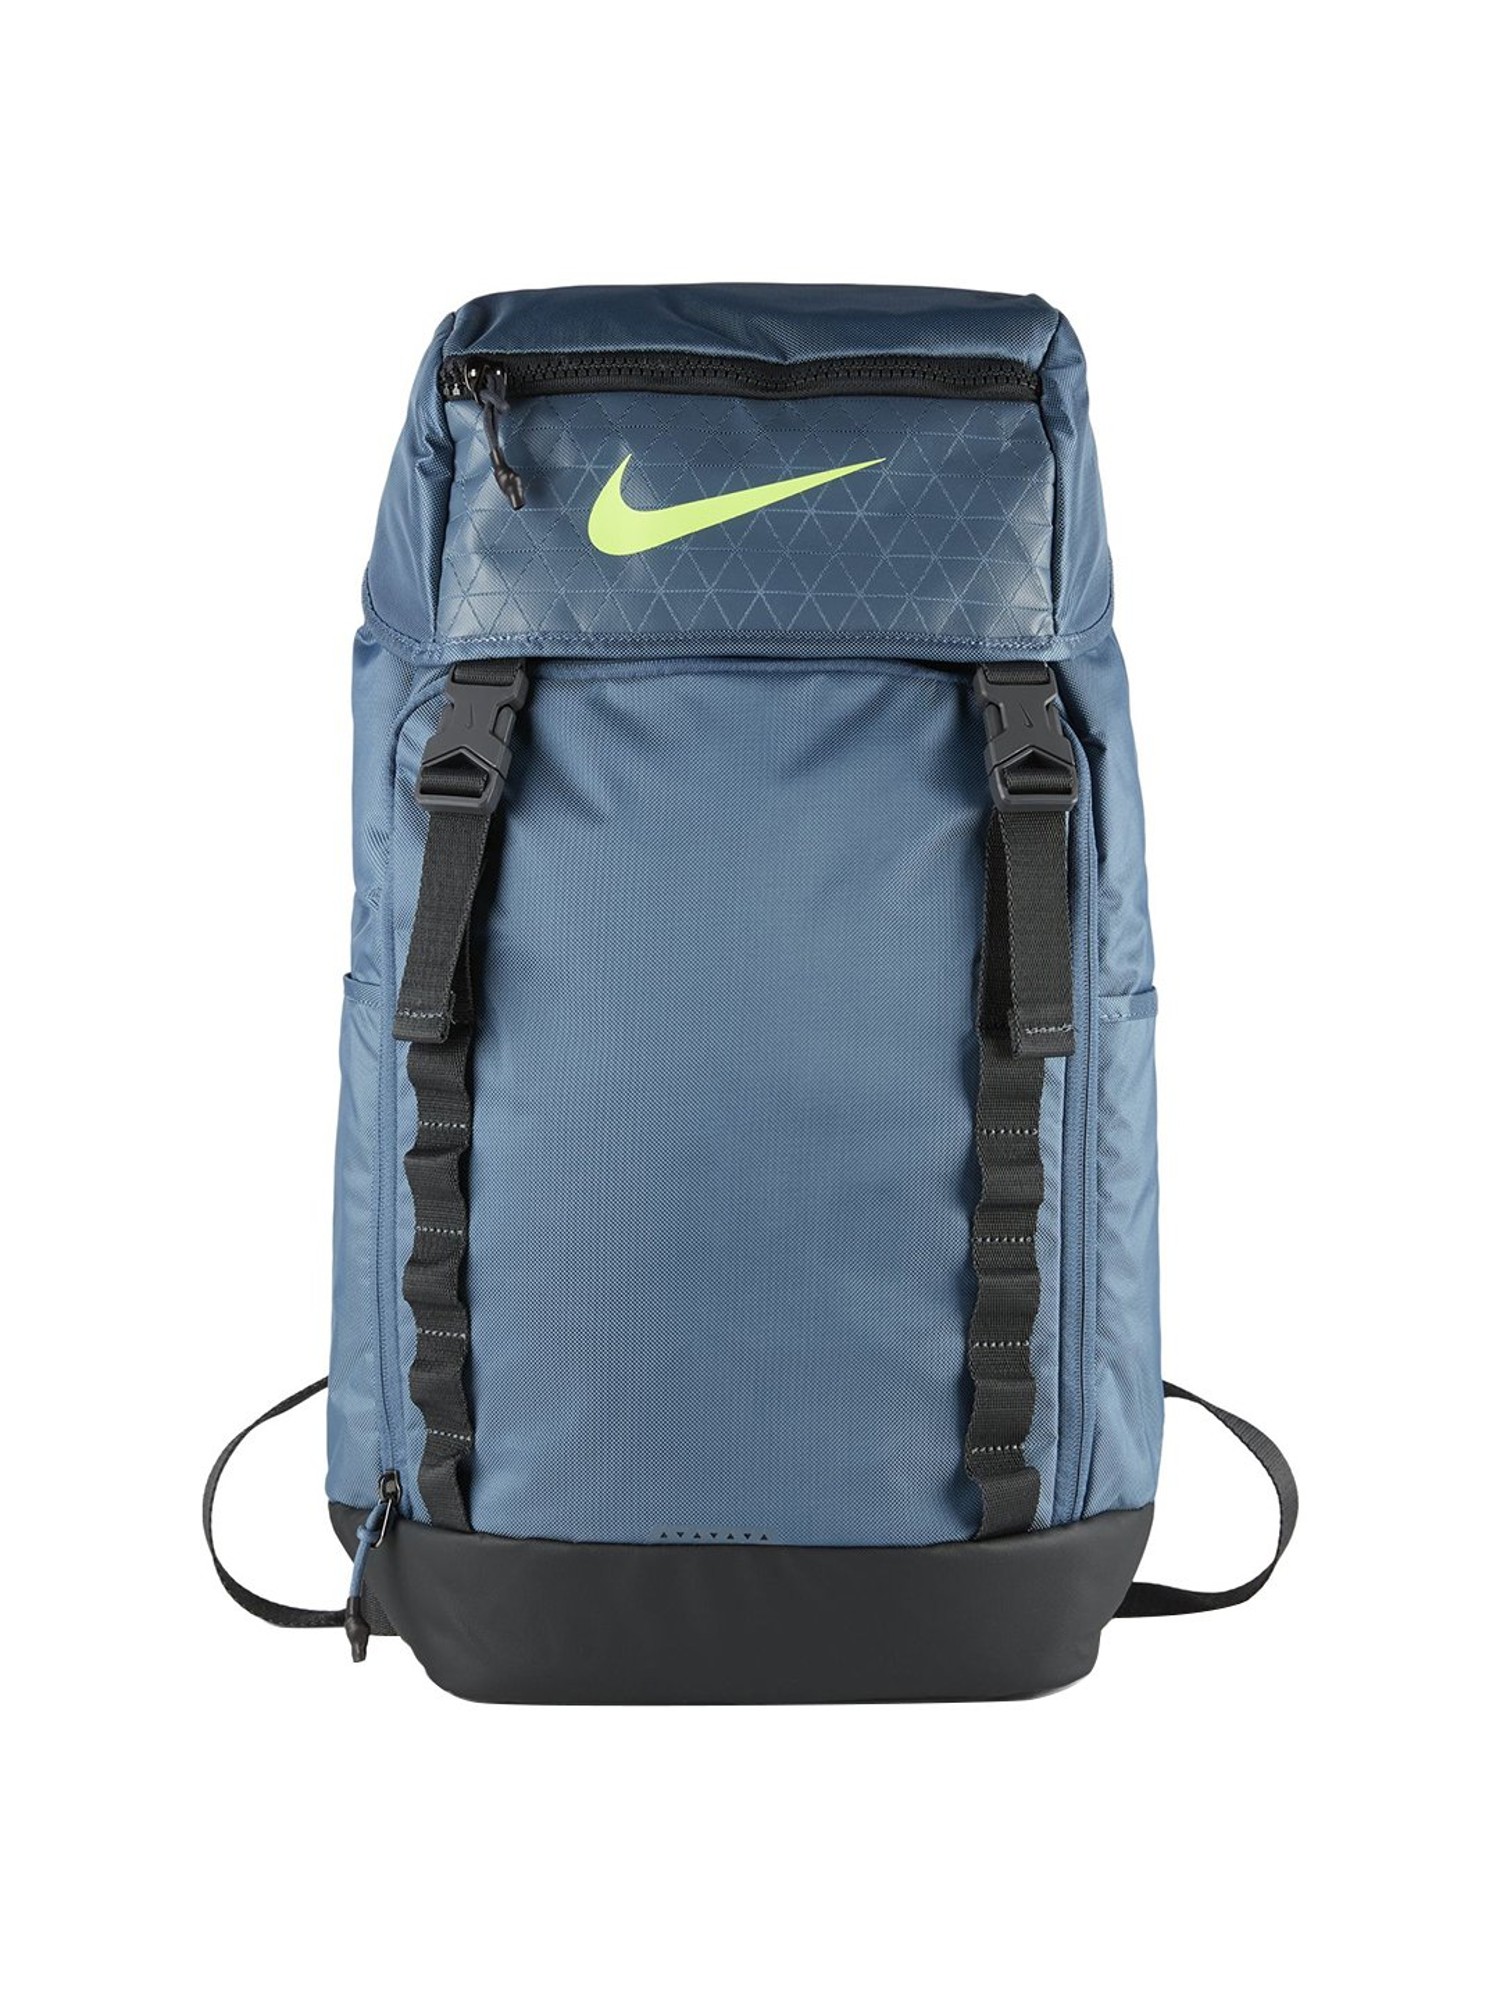 vapor 2.0 backpack